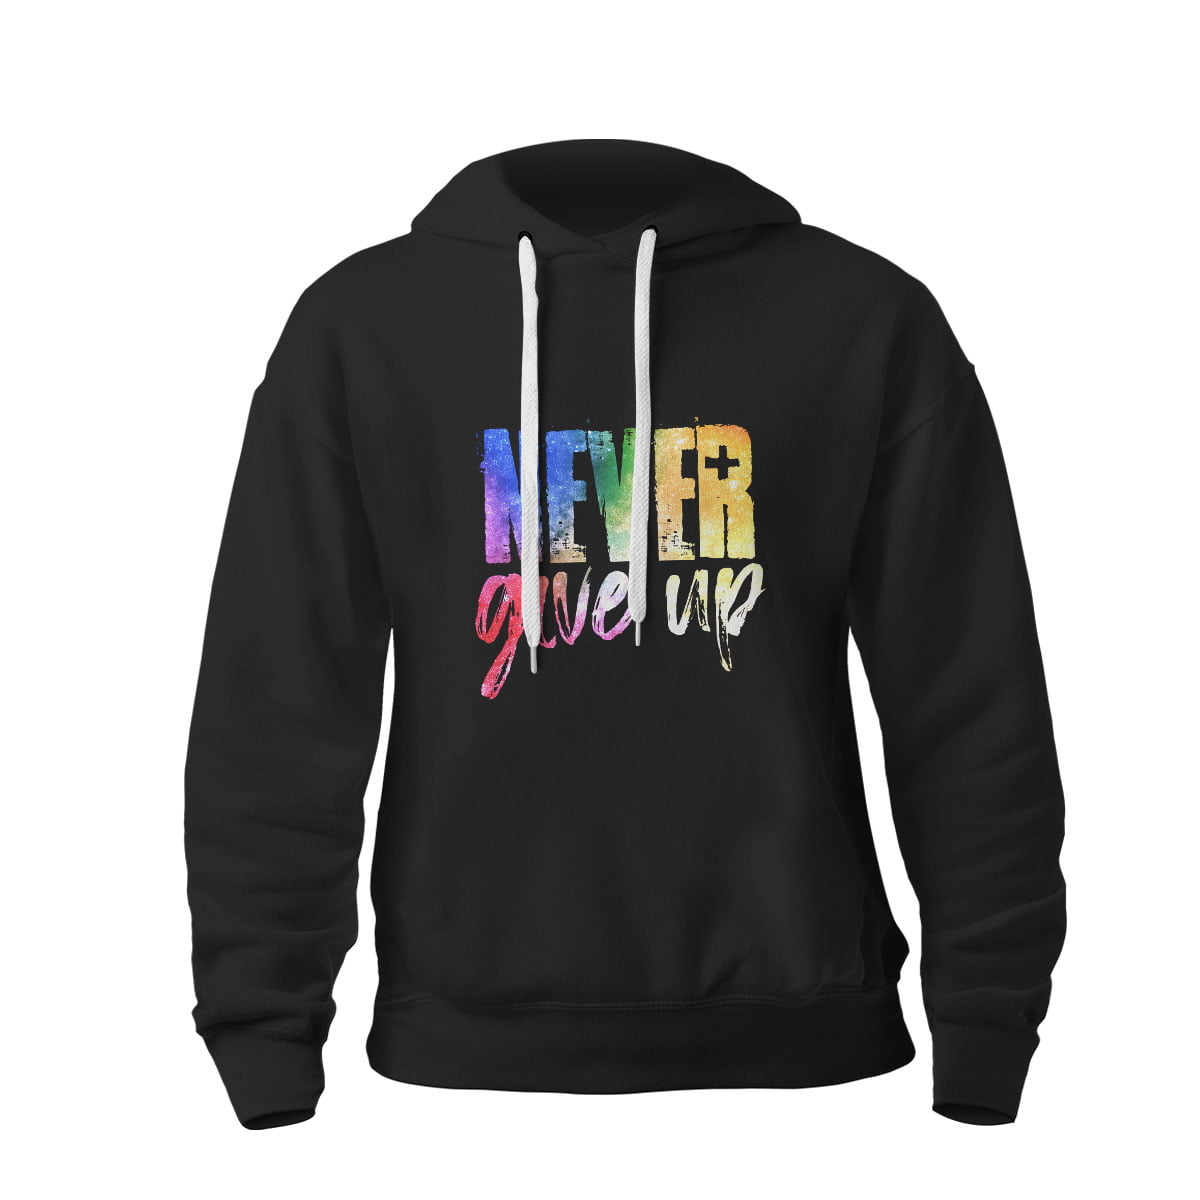 Never give up hodiecepsiz s - never give up baskılı kapşonlu sweatshirt - figurex